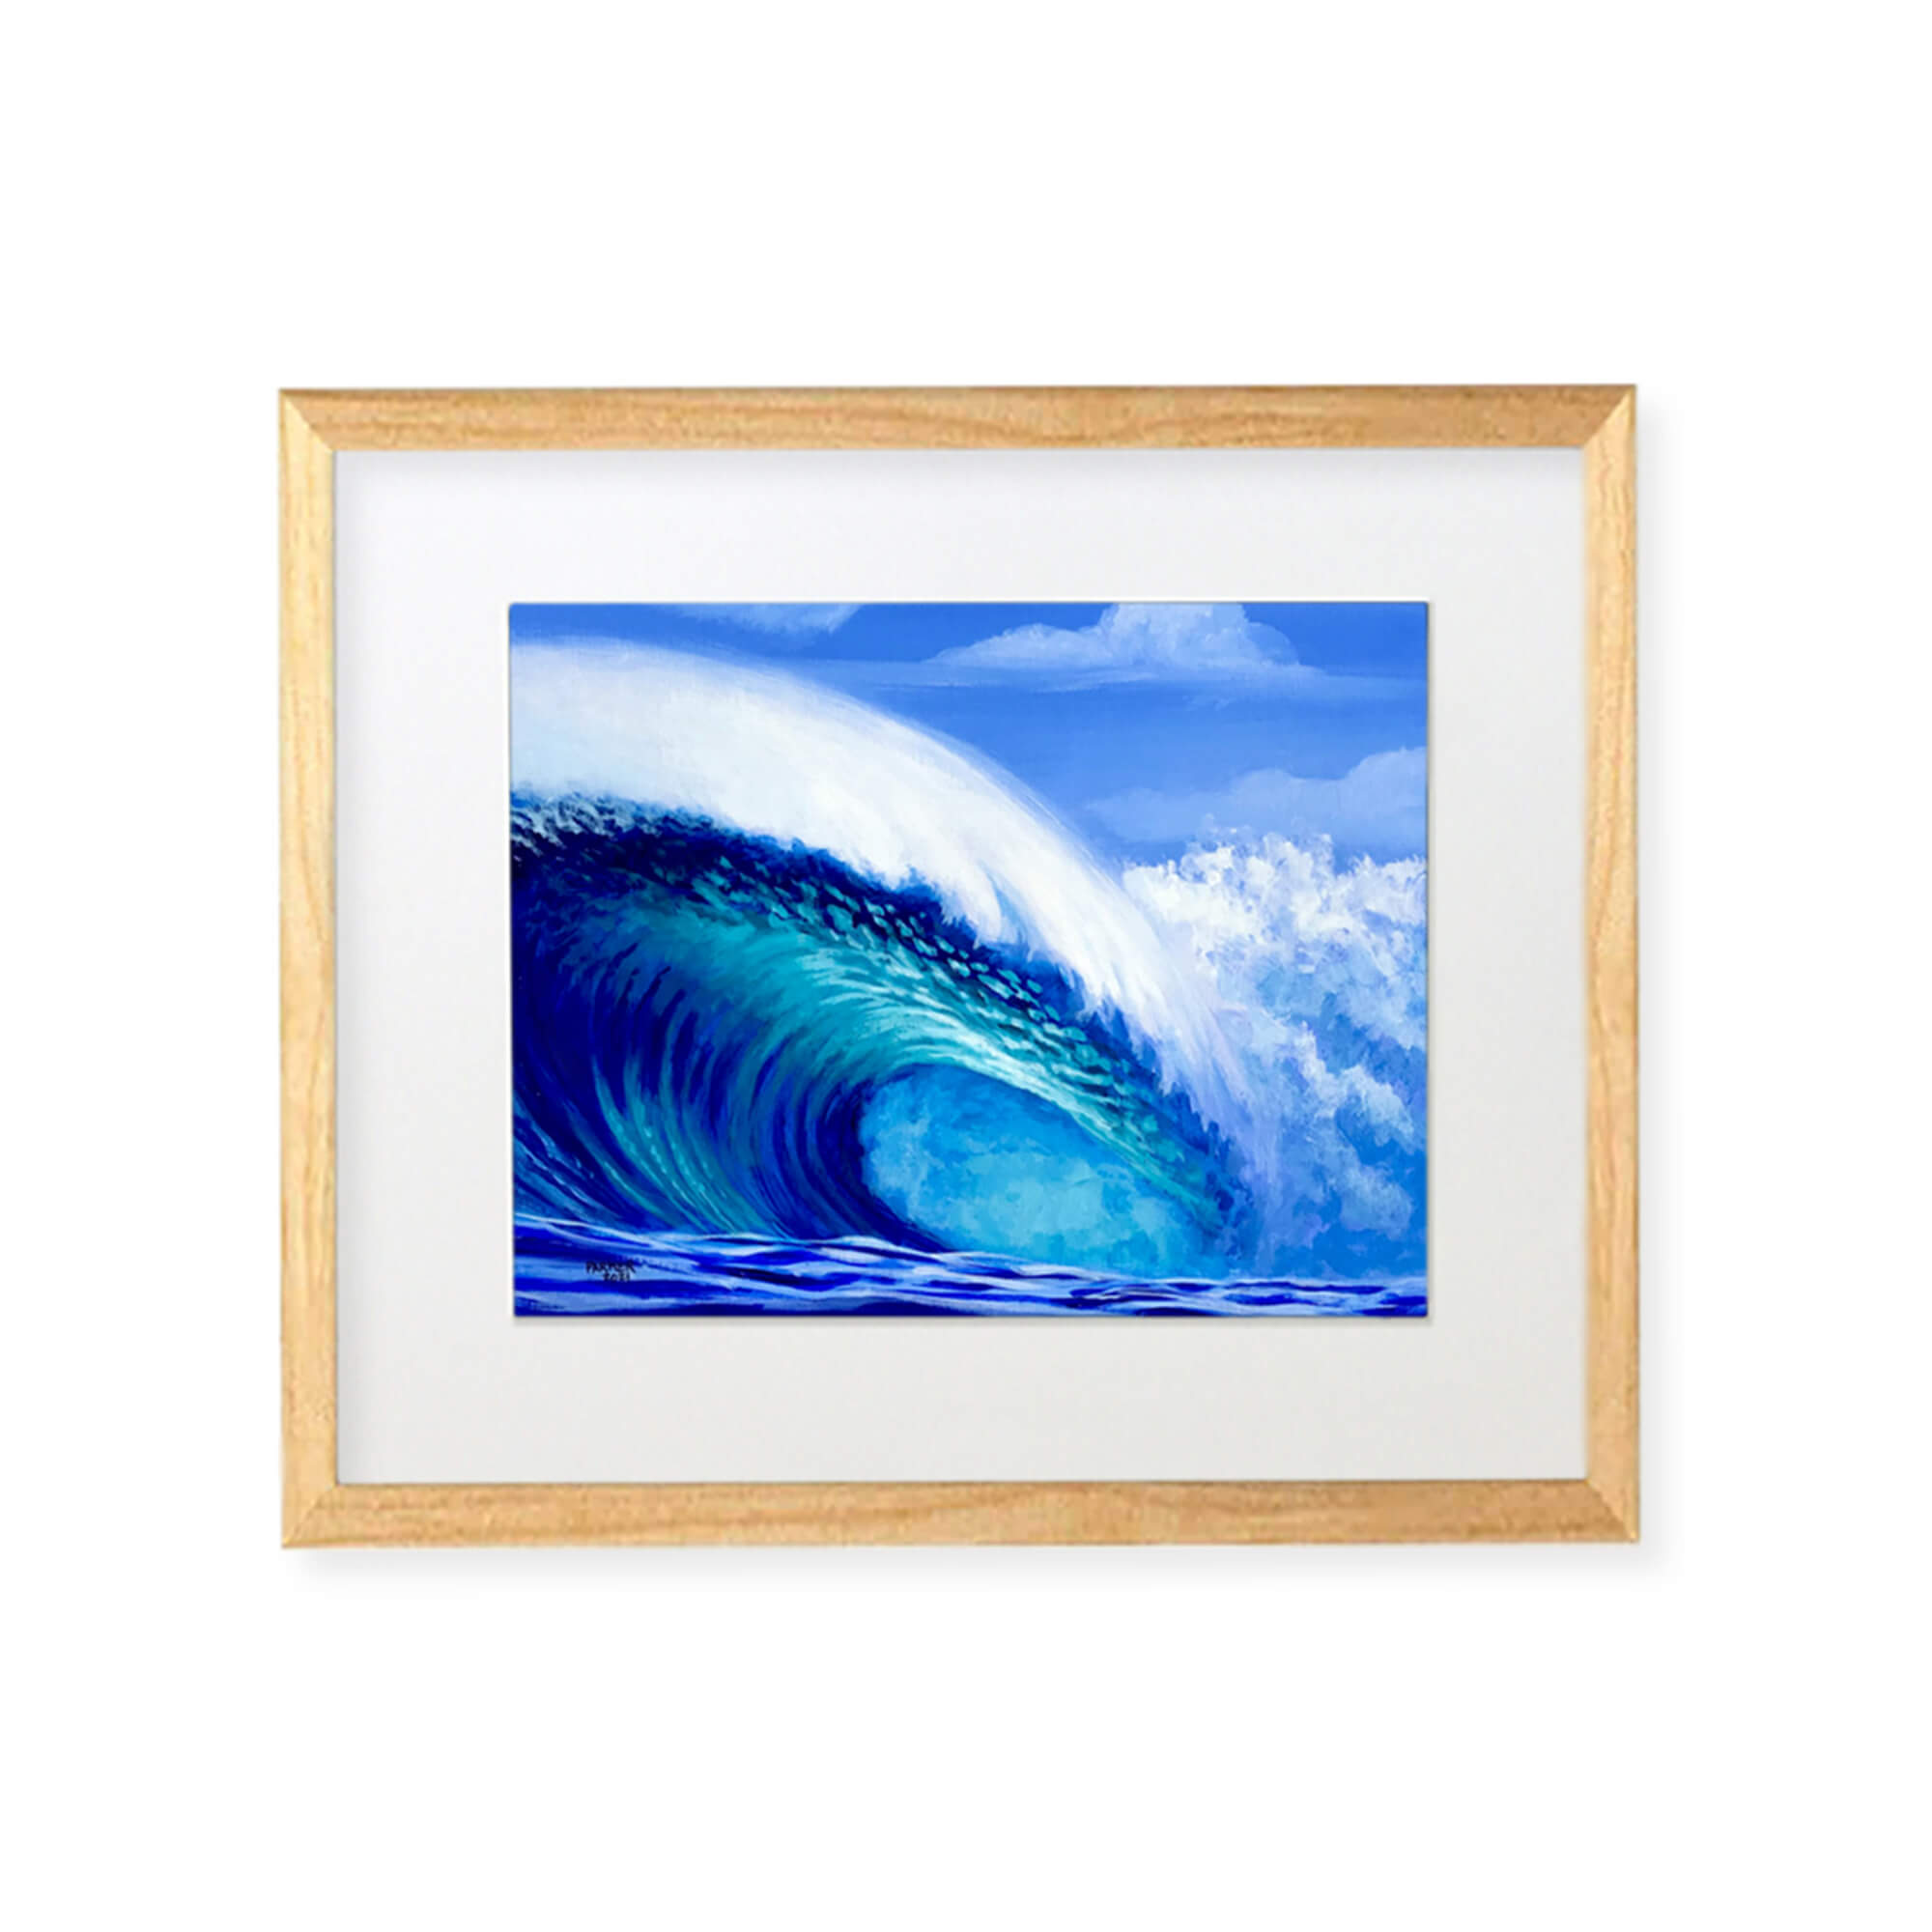 A framed original artwork features a large crashing blue wave by Maui artist Patrick Parker